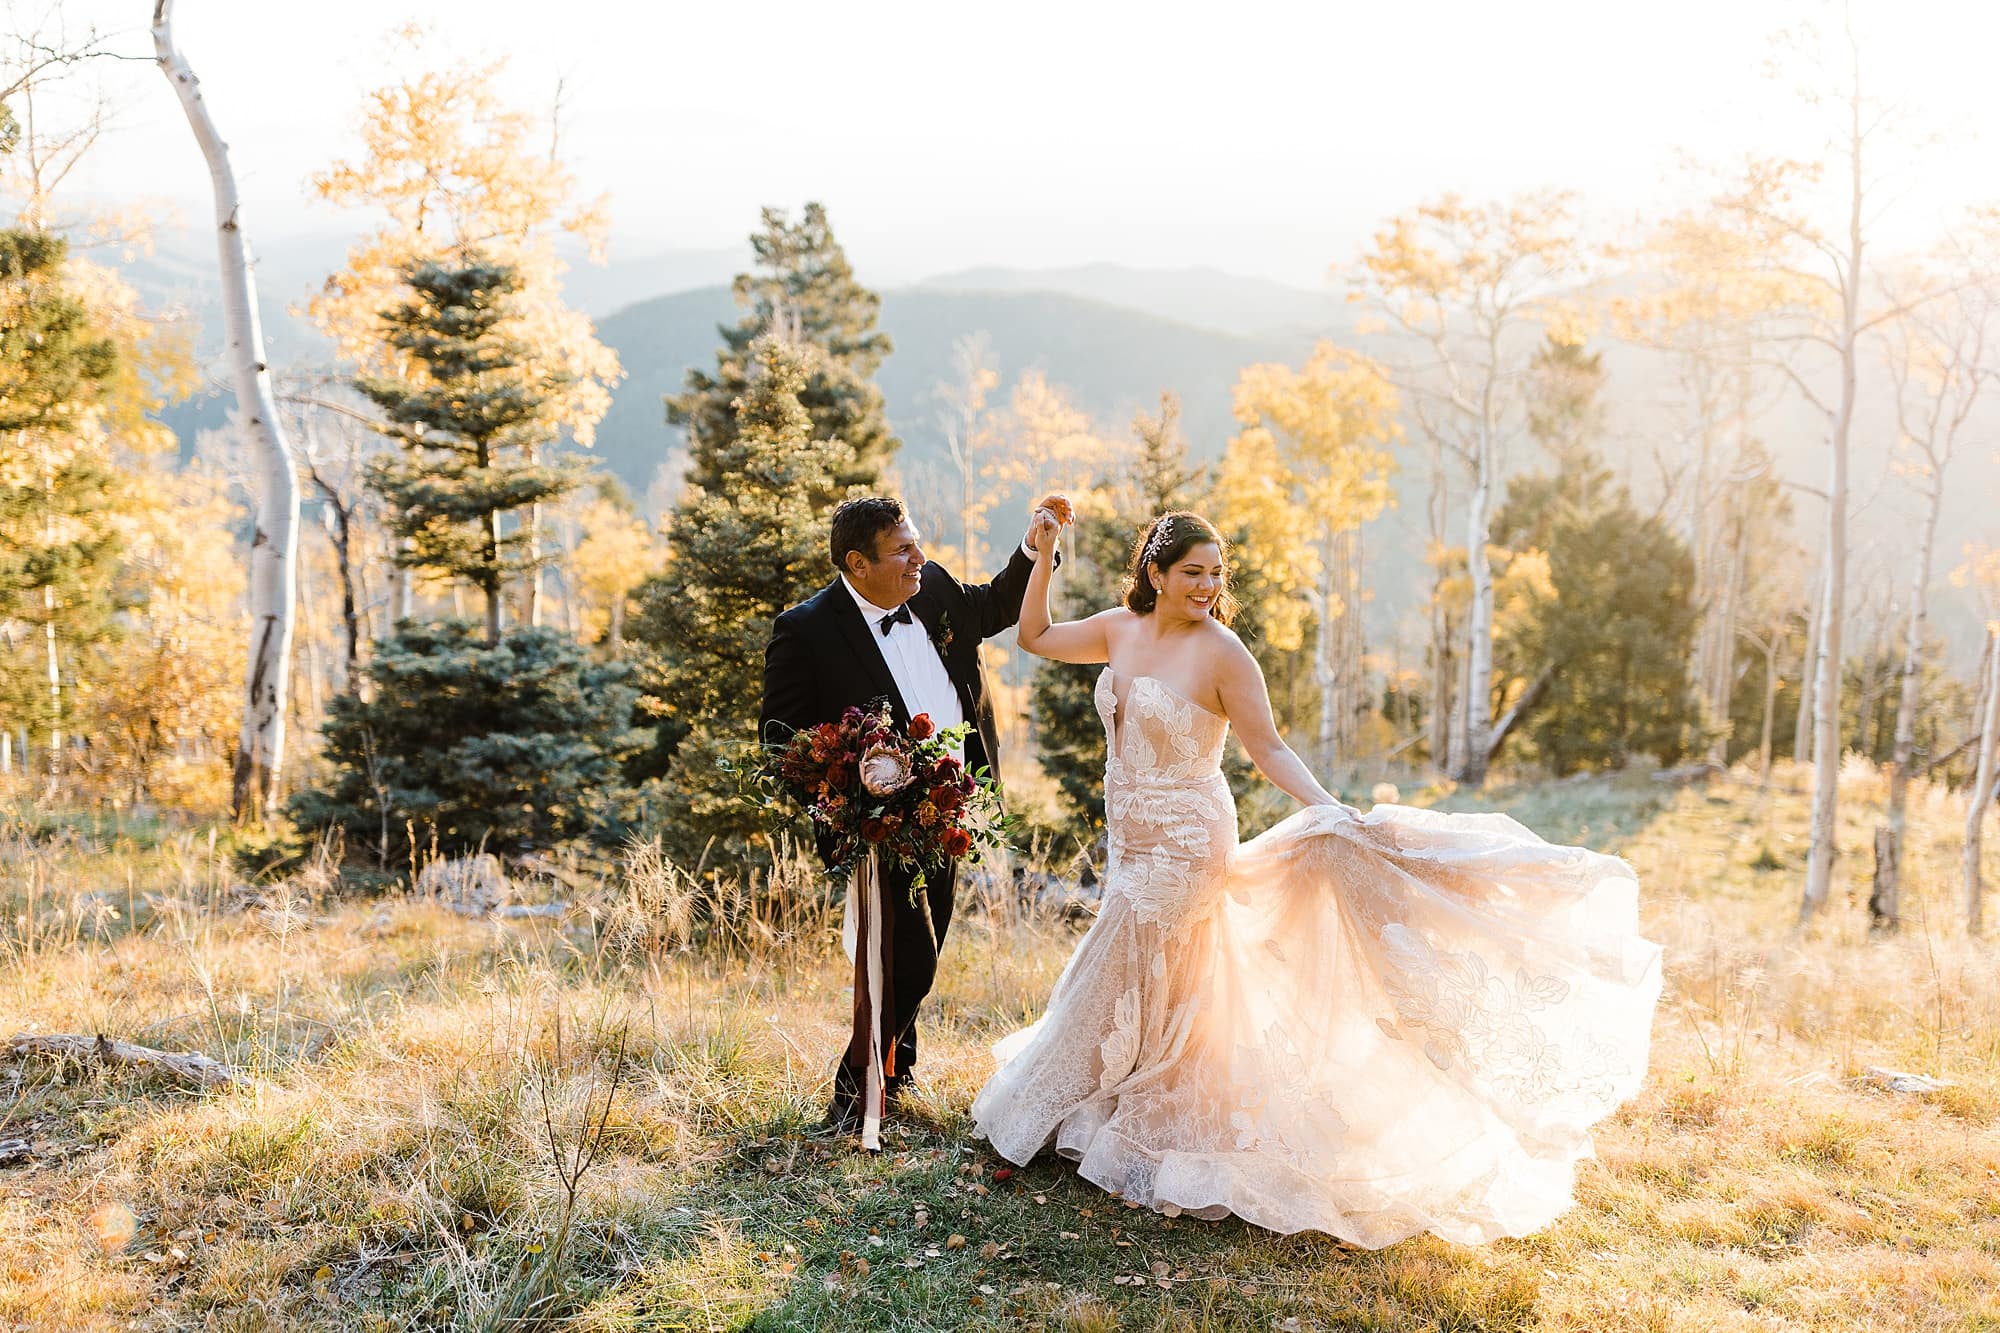 A groom twirls his bride in a forest near Santa Fe